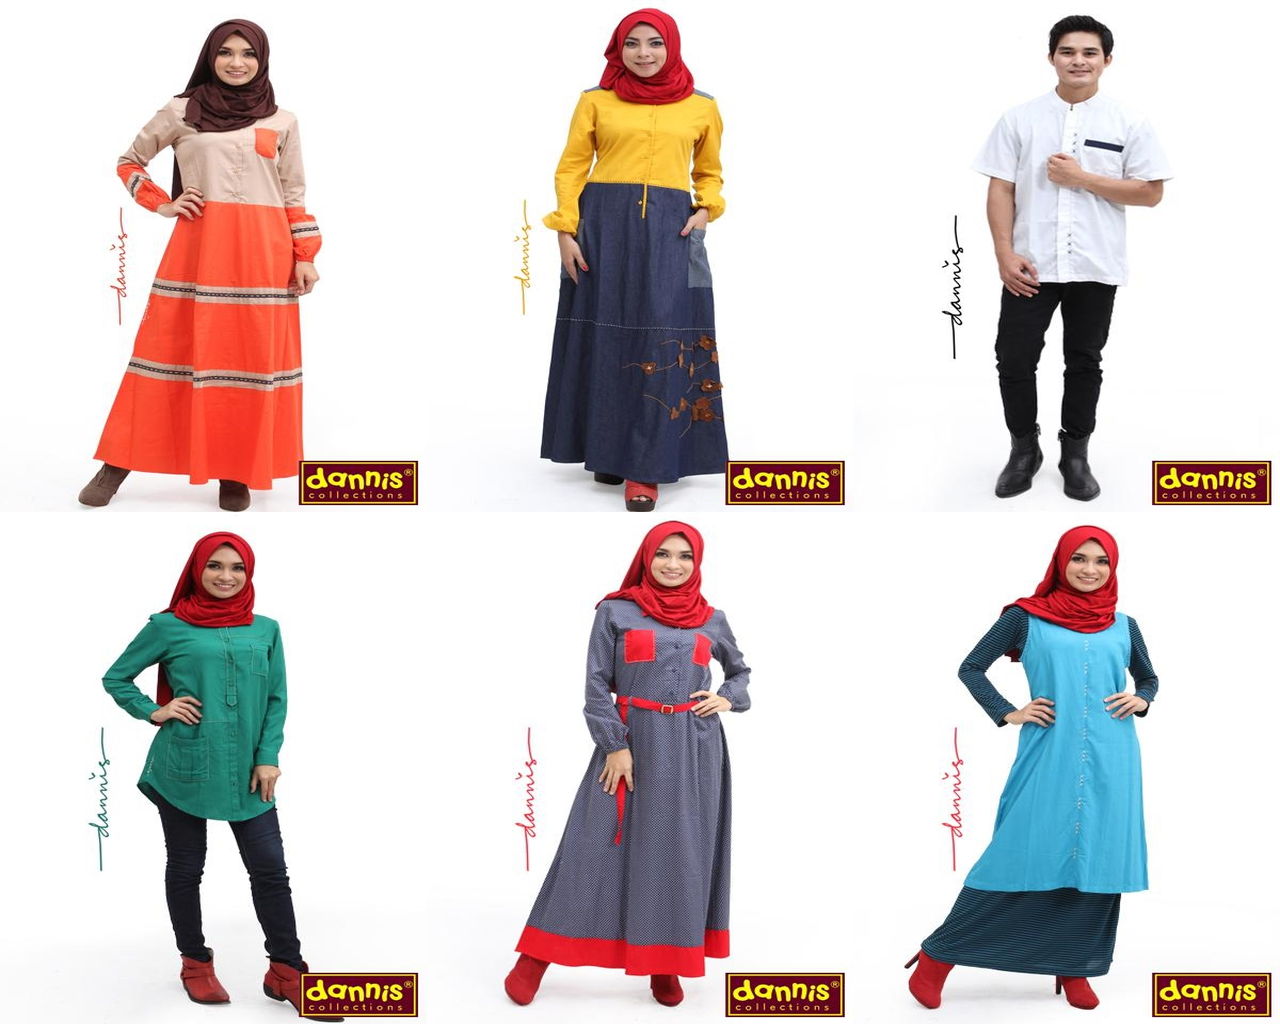  Katalog Dannis 2019 Baju Muslim Dewasa Muslim Adult Wear 